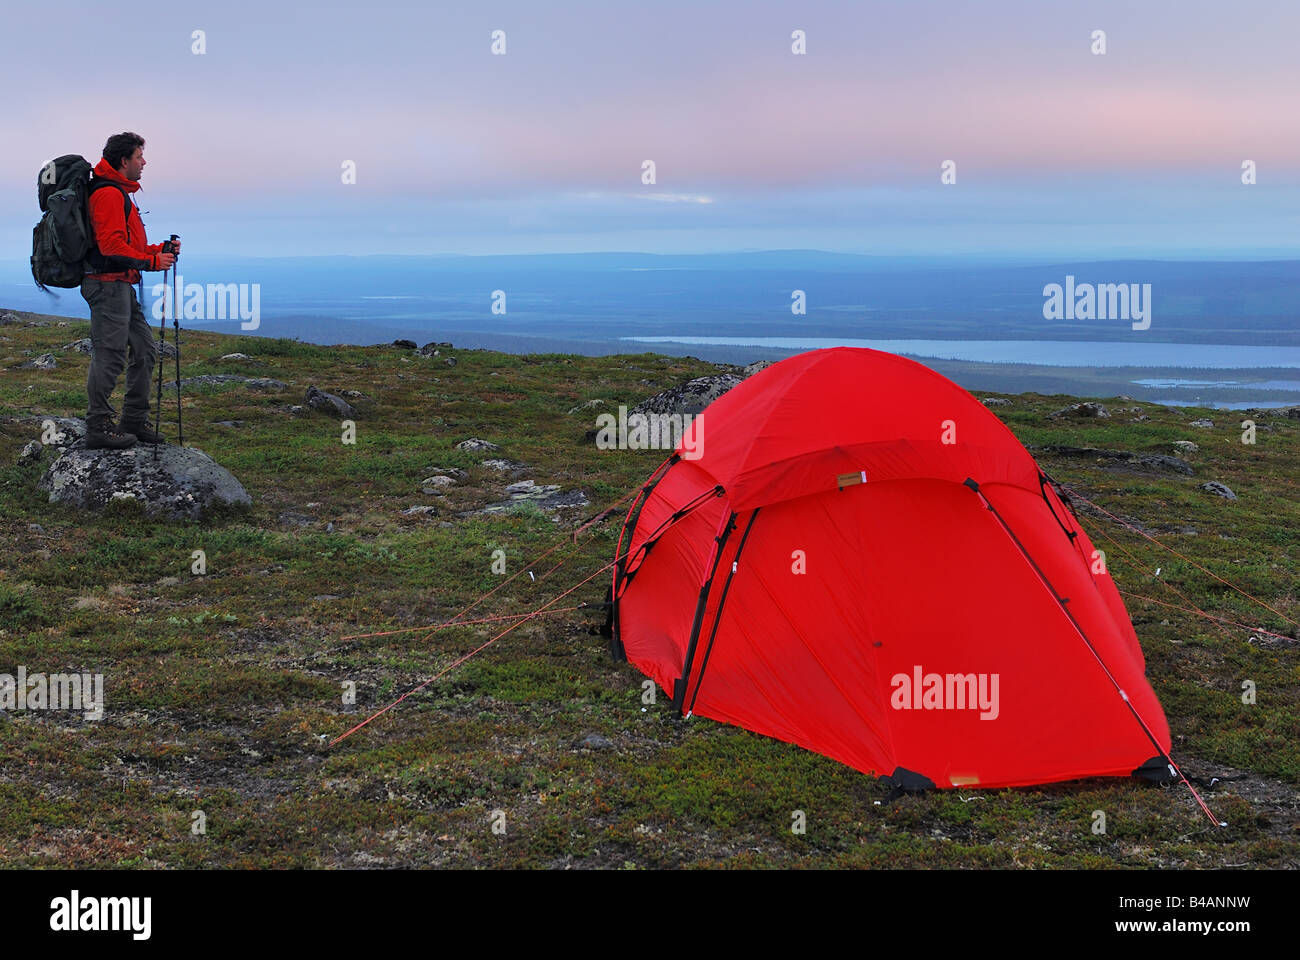 outdoor camp mount dundret stora sjoefallet national park lapland sweden  gaellivare Stock Photo - Alamy